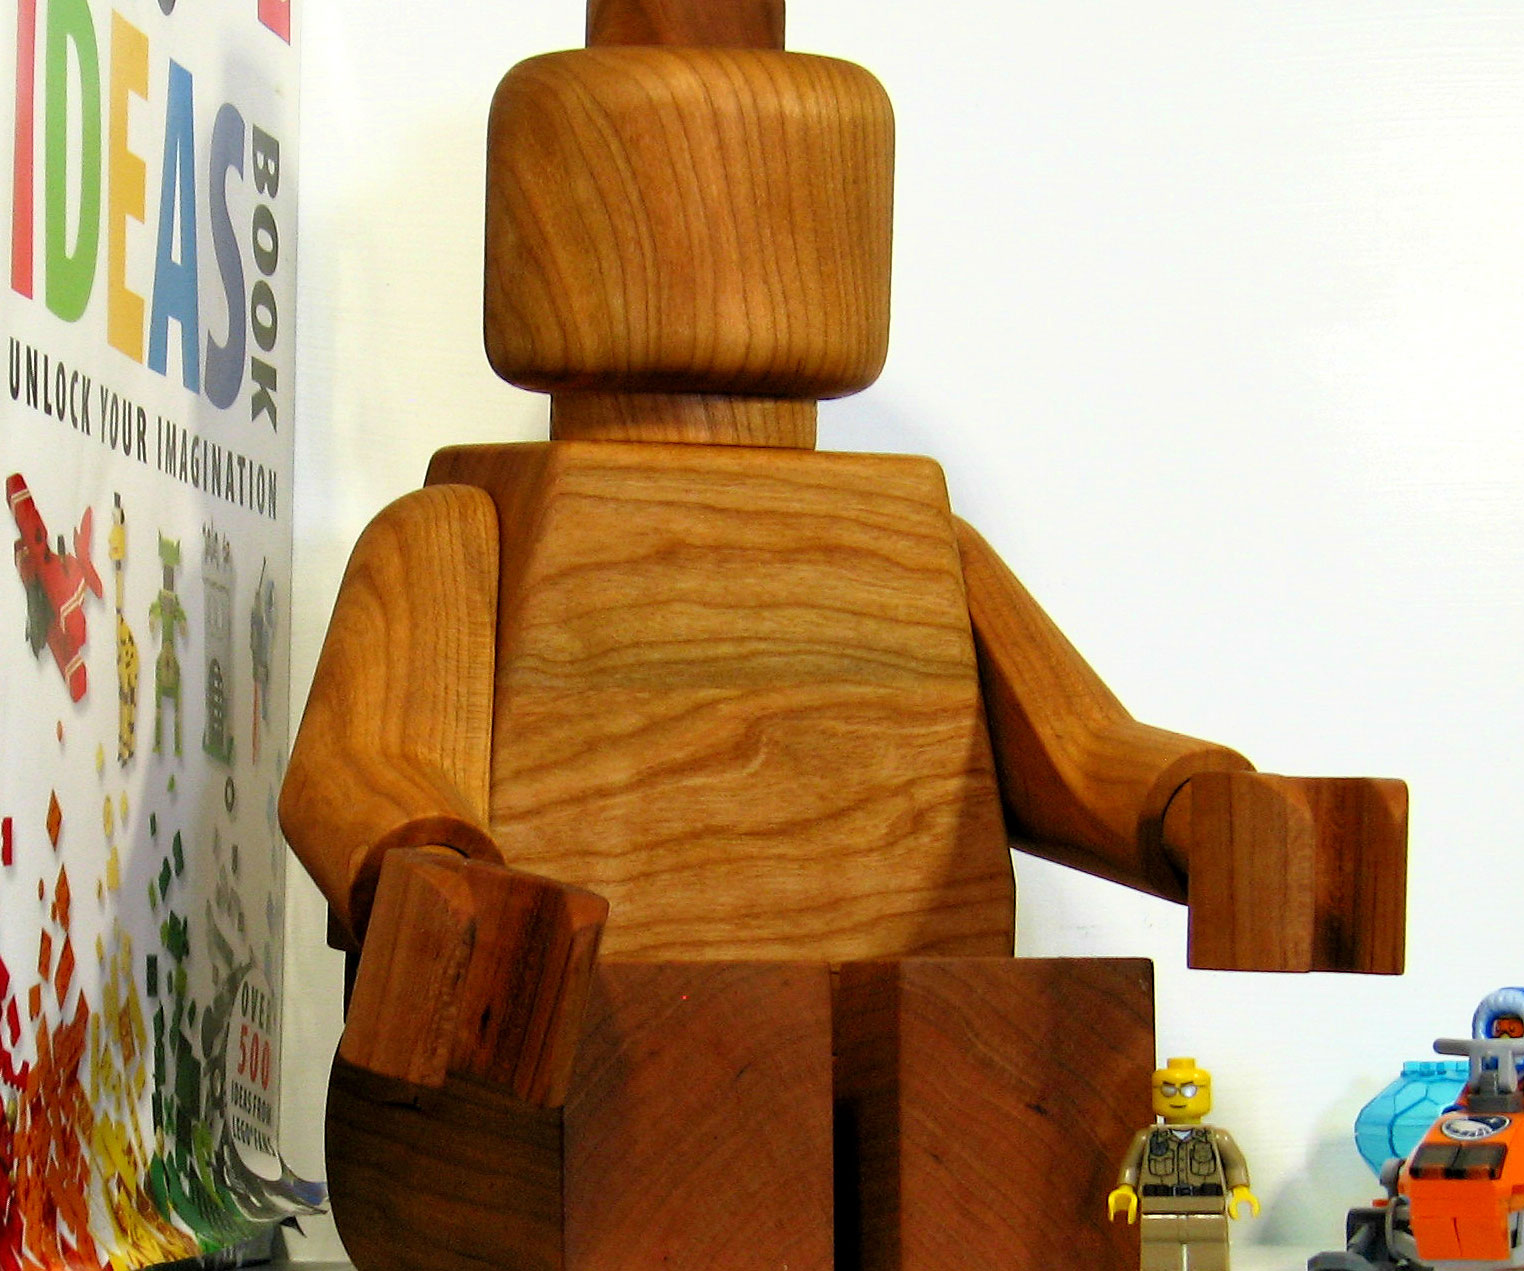 Escultura de hombre LEGO de madera gigante